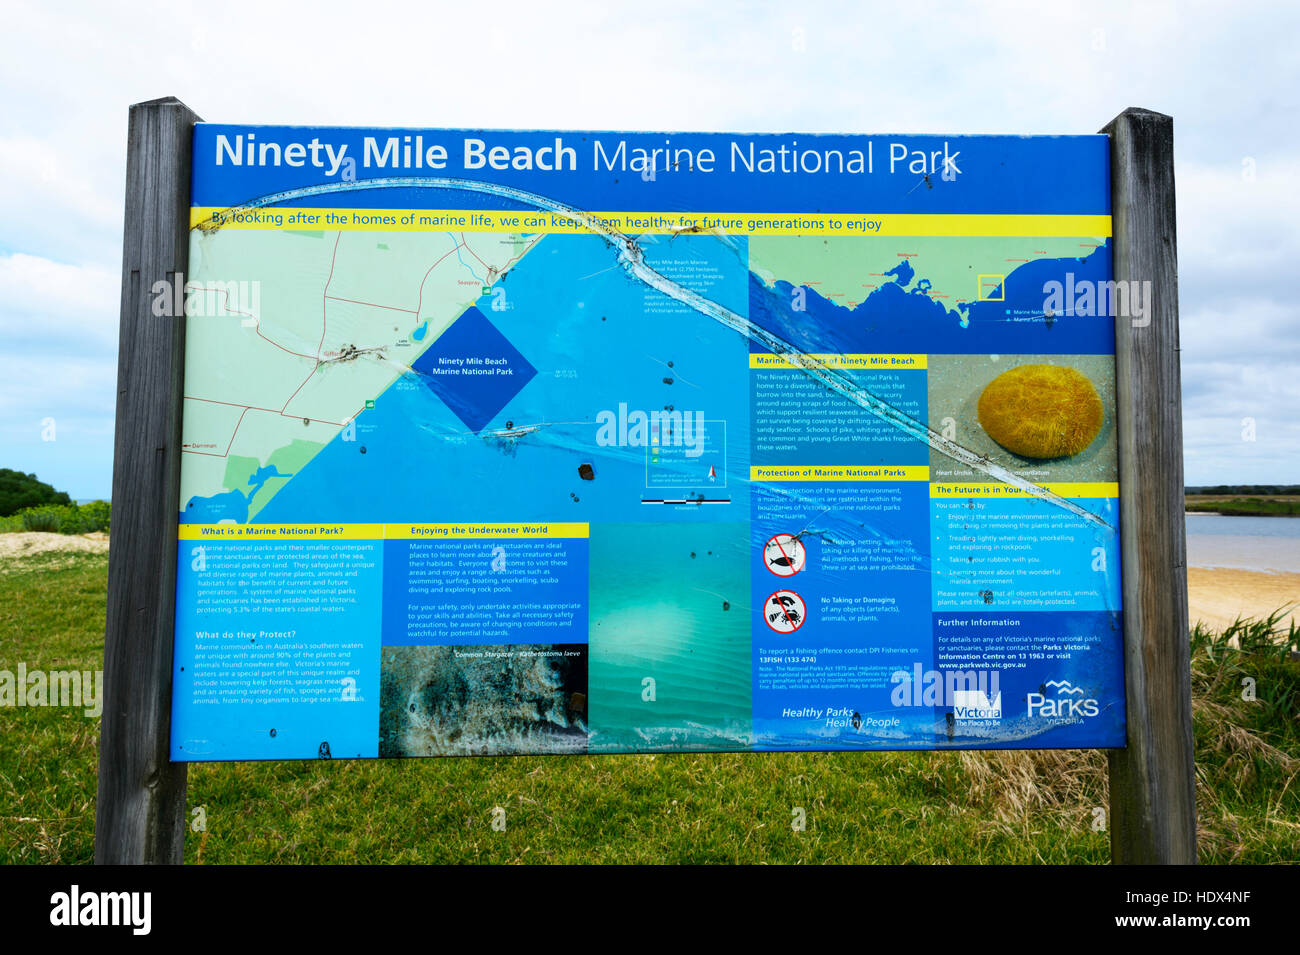 'Ninety Mile Beach Marine National Park' information board and map at Seaspray, Victoria, VIC, Australia Stock Photo